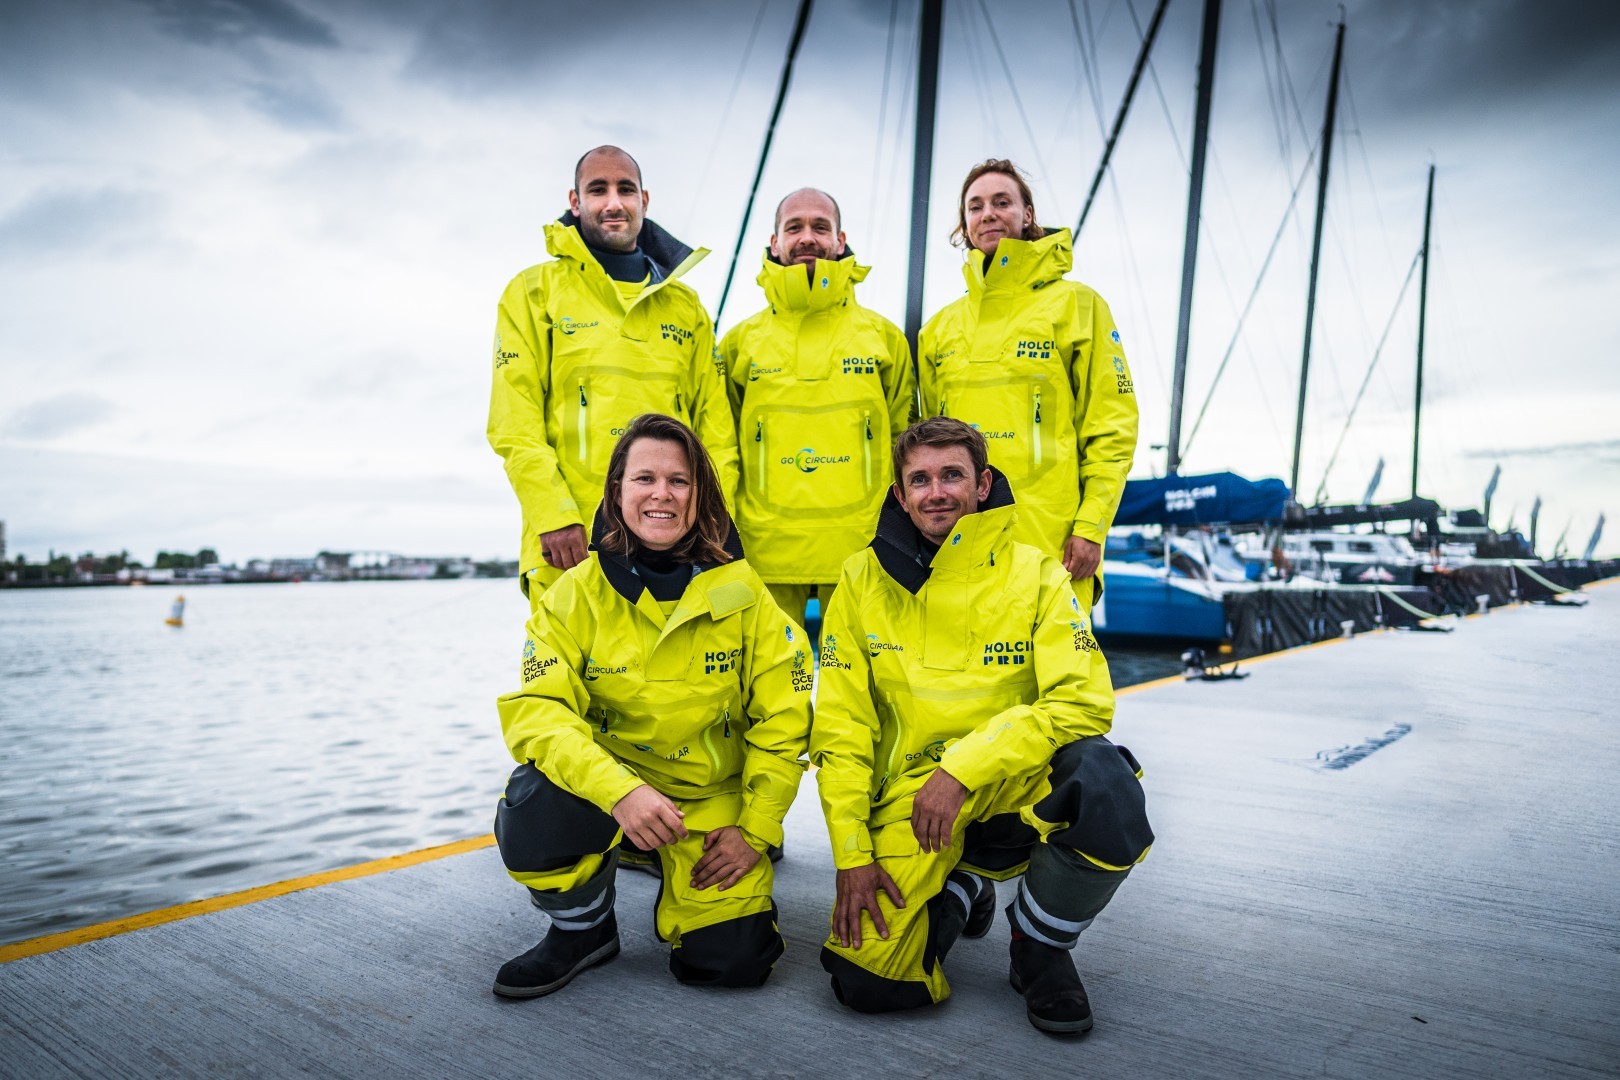 Team Holcim - PRB crew for Leg 4.
© Julien Champolion | polaRYSE / Holcim - PRB / The Ocean Race